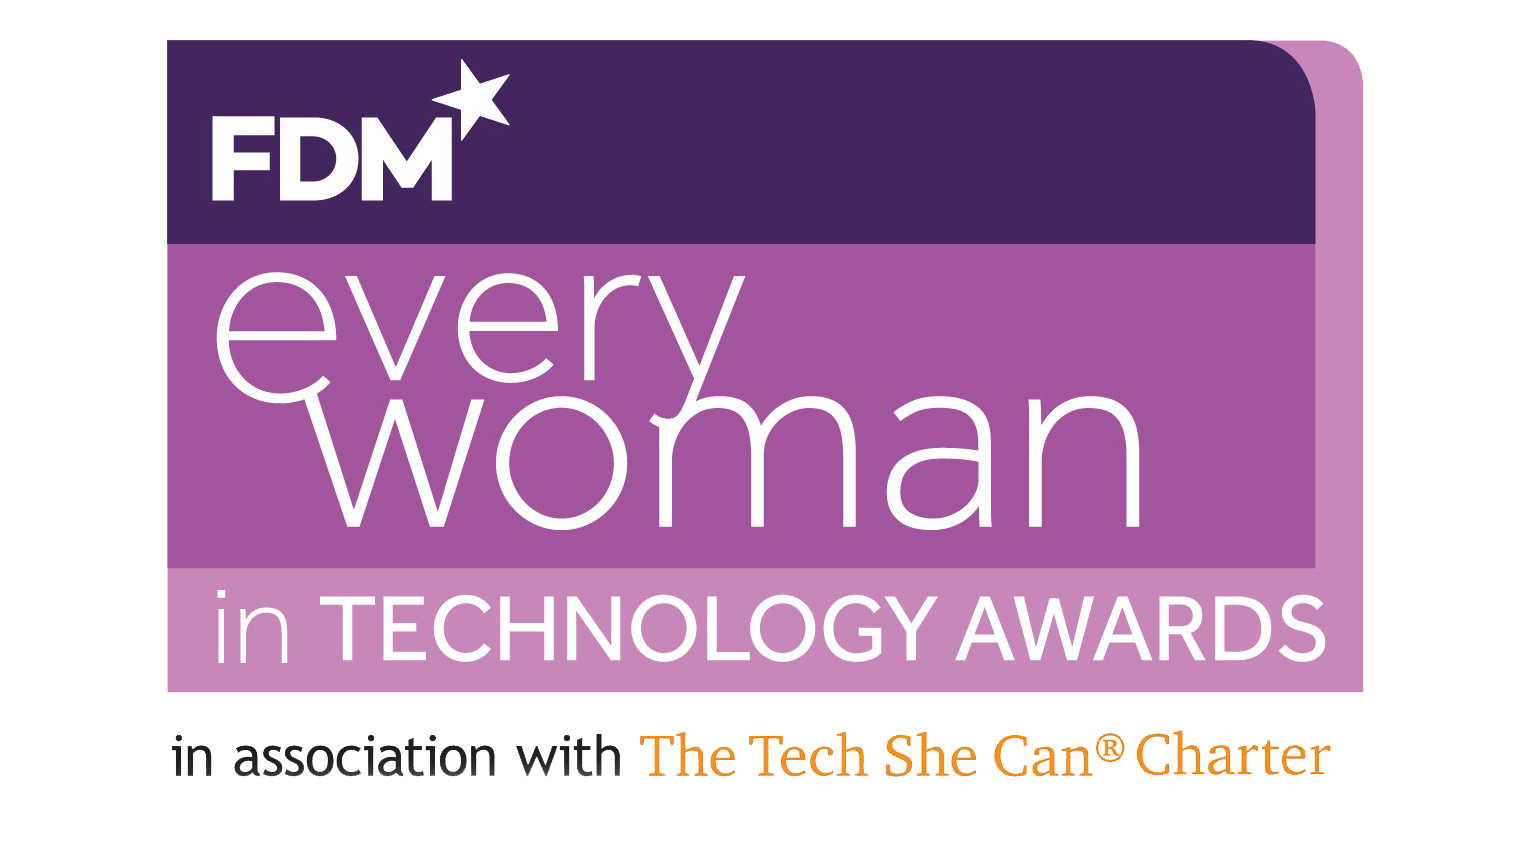 2021 FDM everywoman in Technology Awards Winners Announced